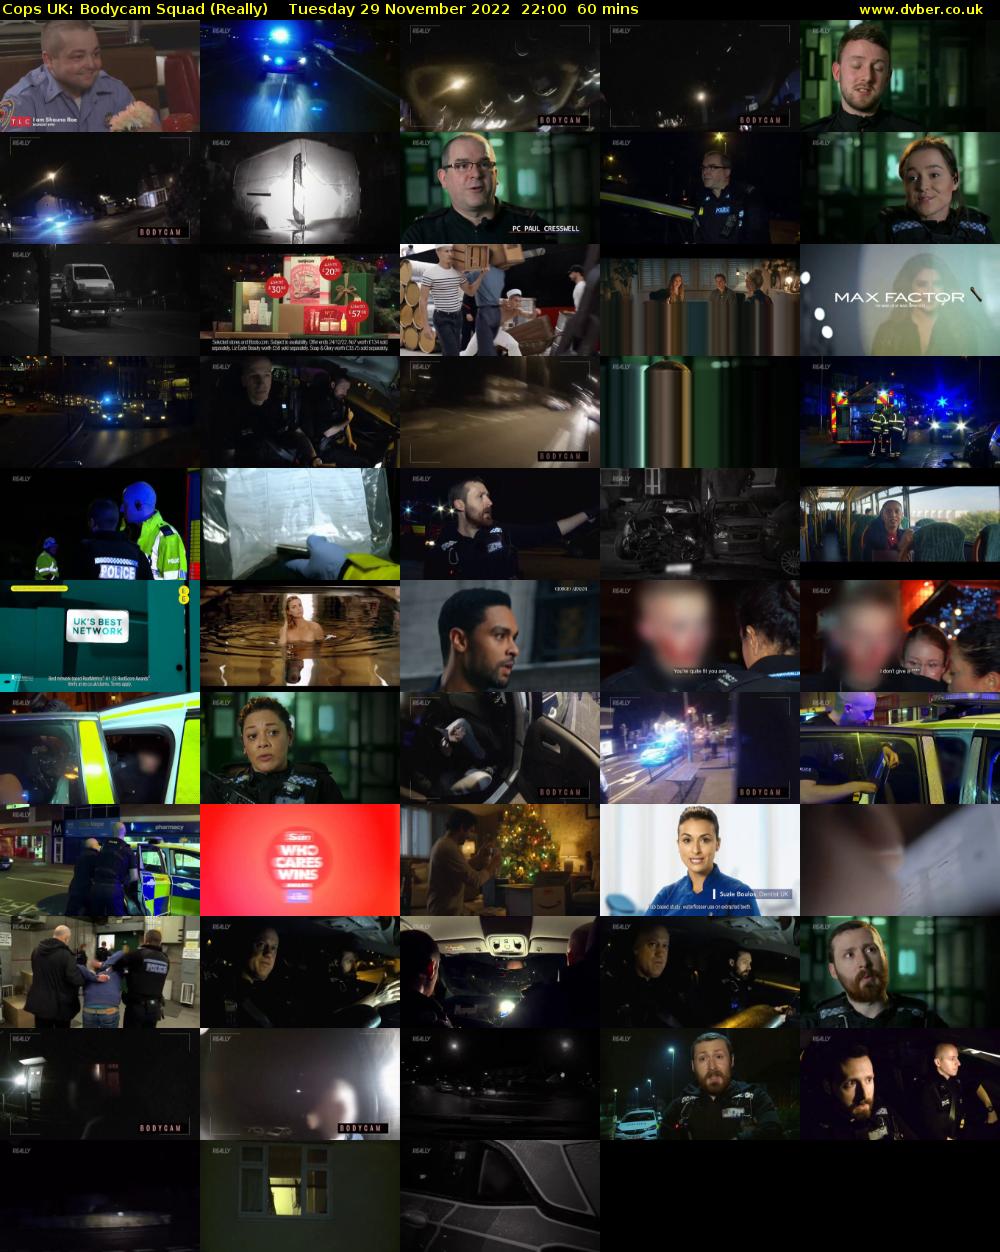 Cops UK: Bodycam Squad (Really) Tuesday 29 November 2022 22:00 - 23:00